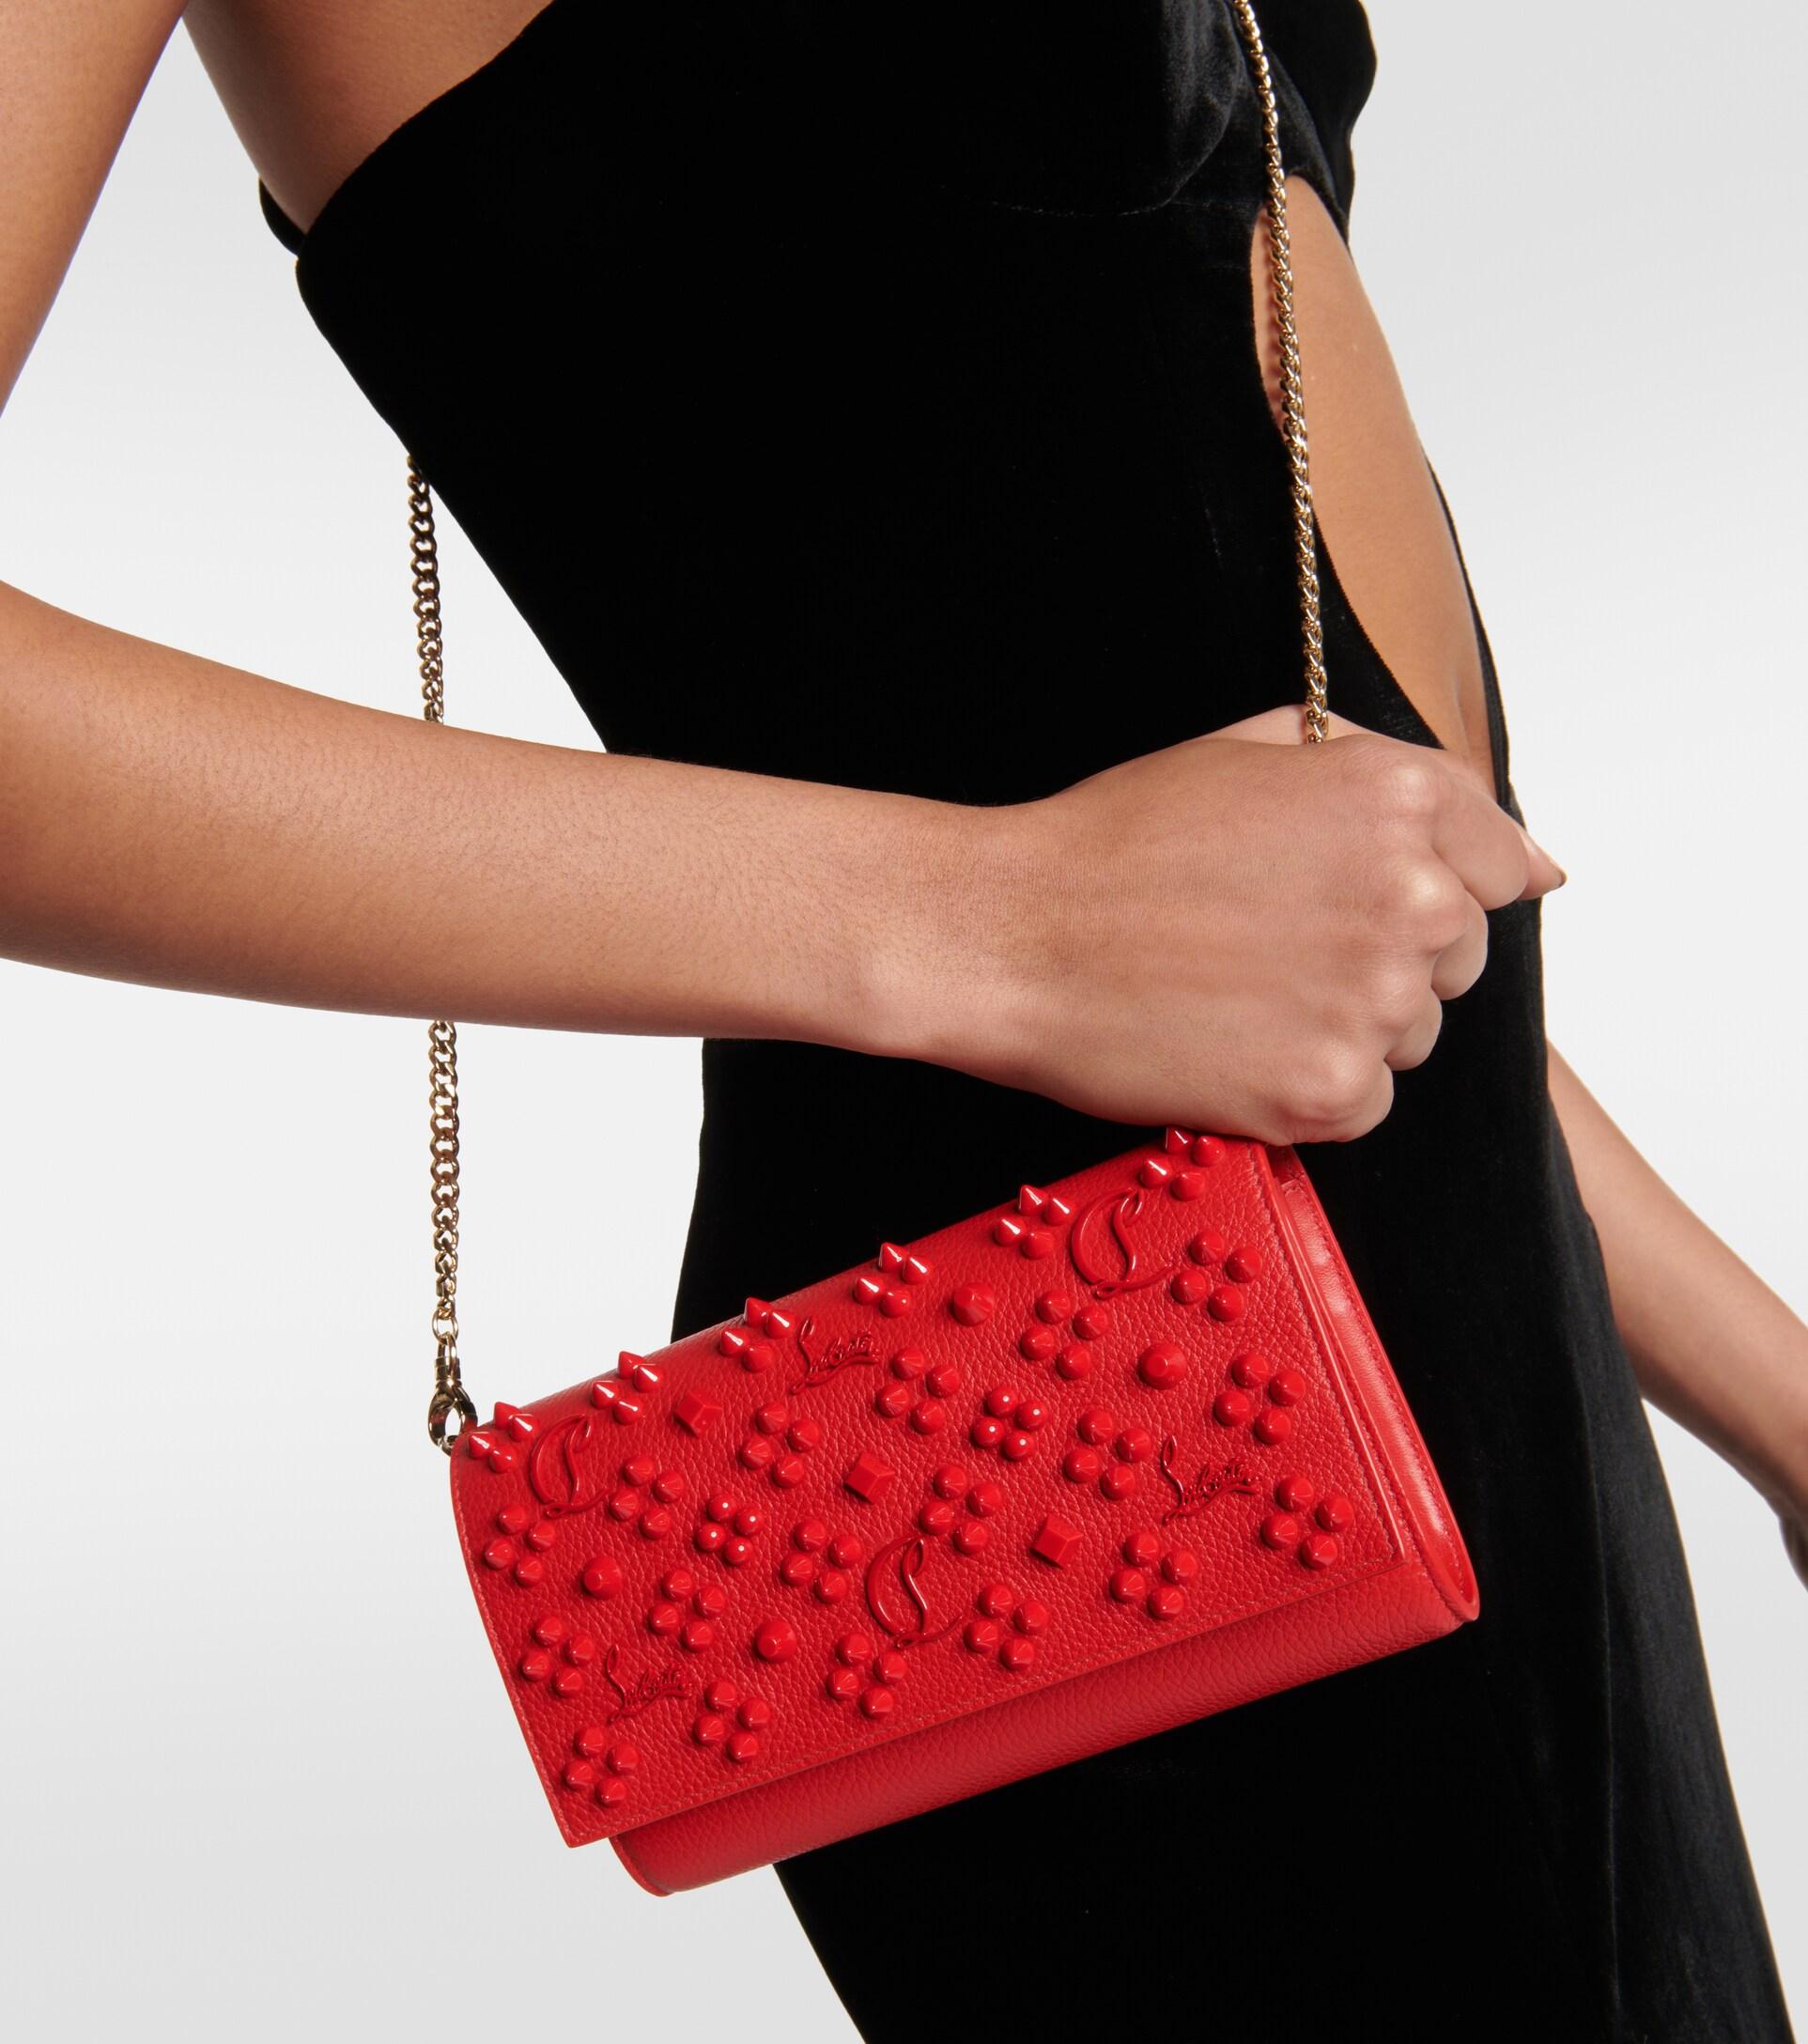 Louboutin Paloma Fold-Over Embellished Clutch Bag w/ Box - Boca Pawn